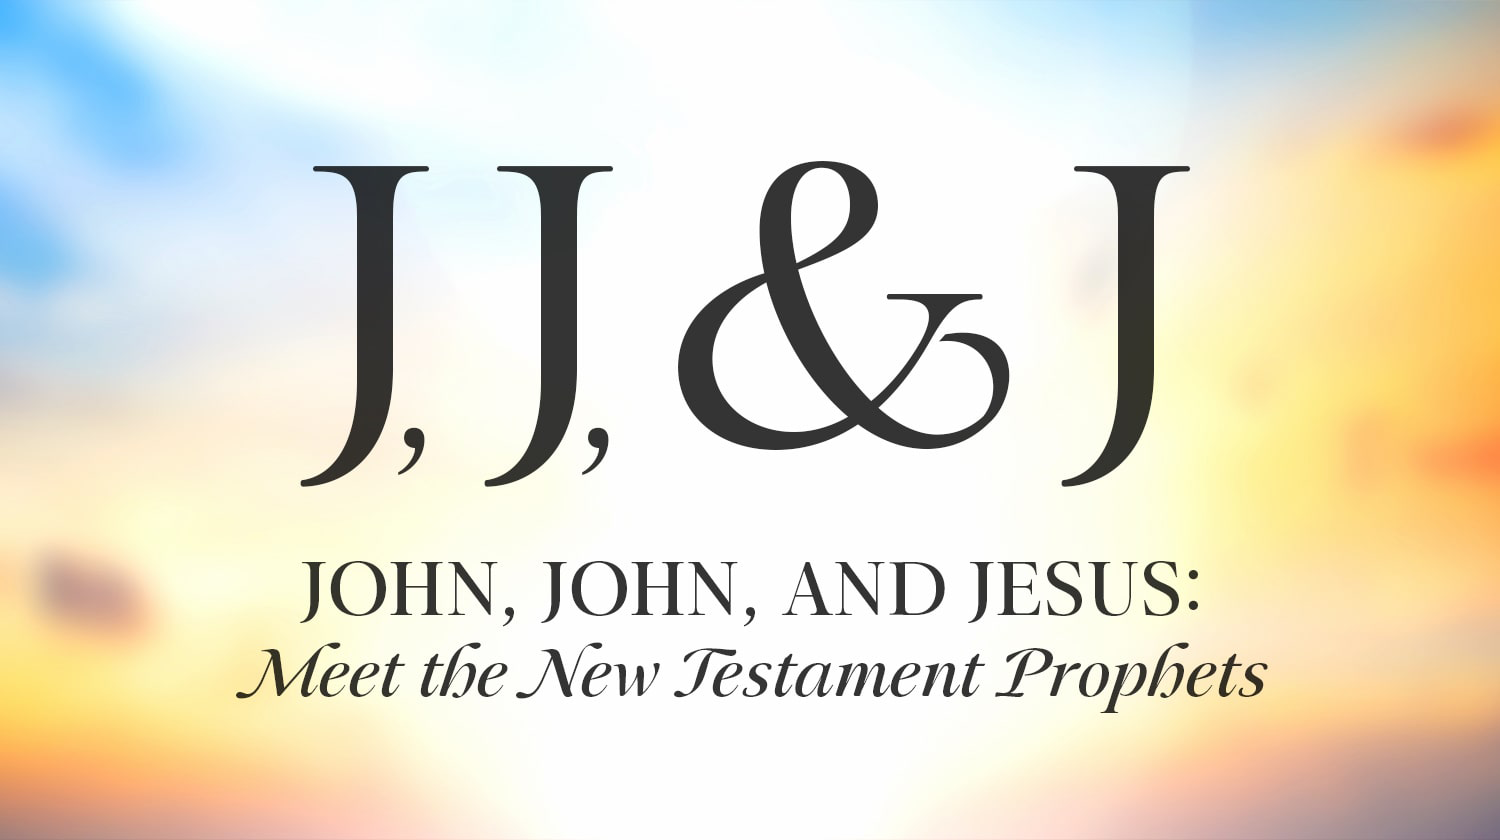 John, John, and Jesus: Meet the New Testament Prophets